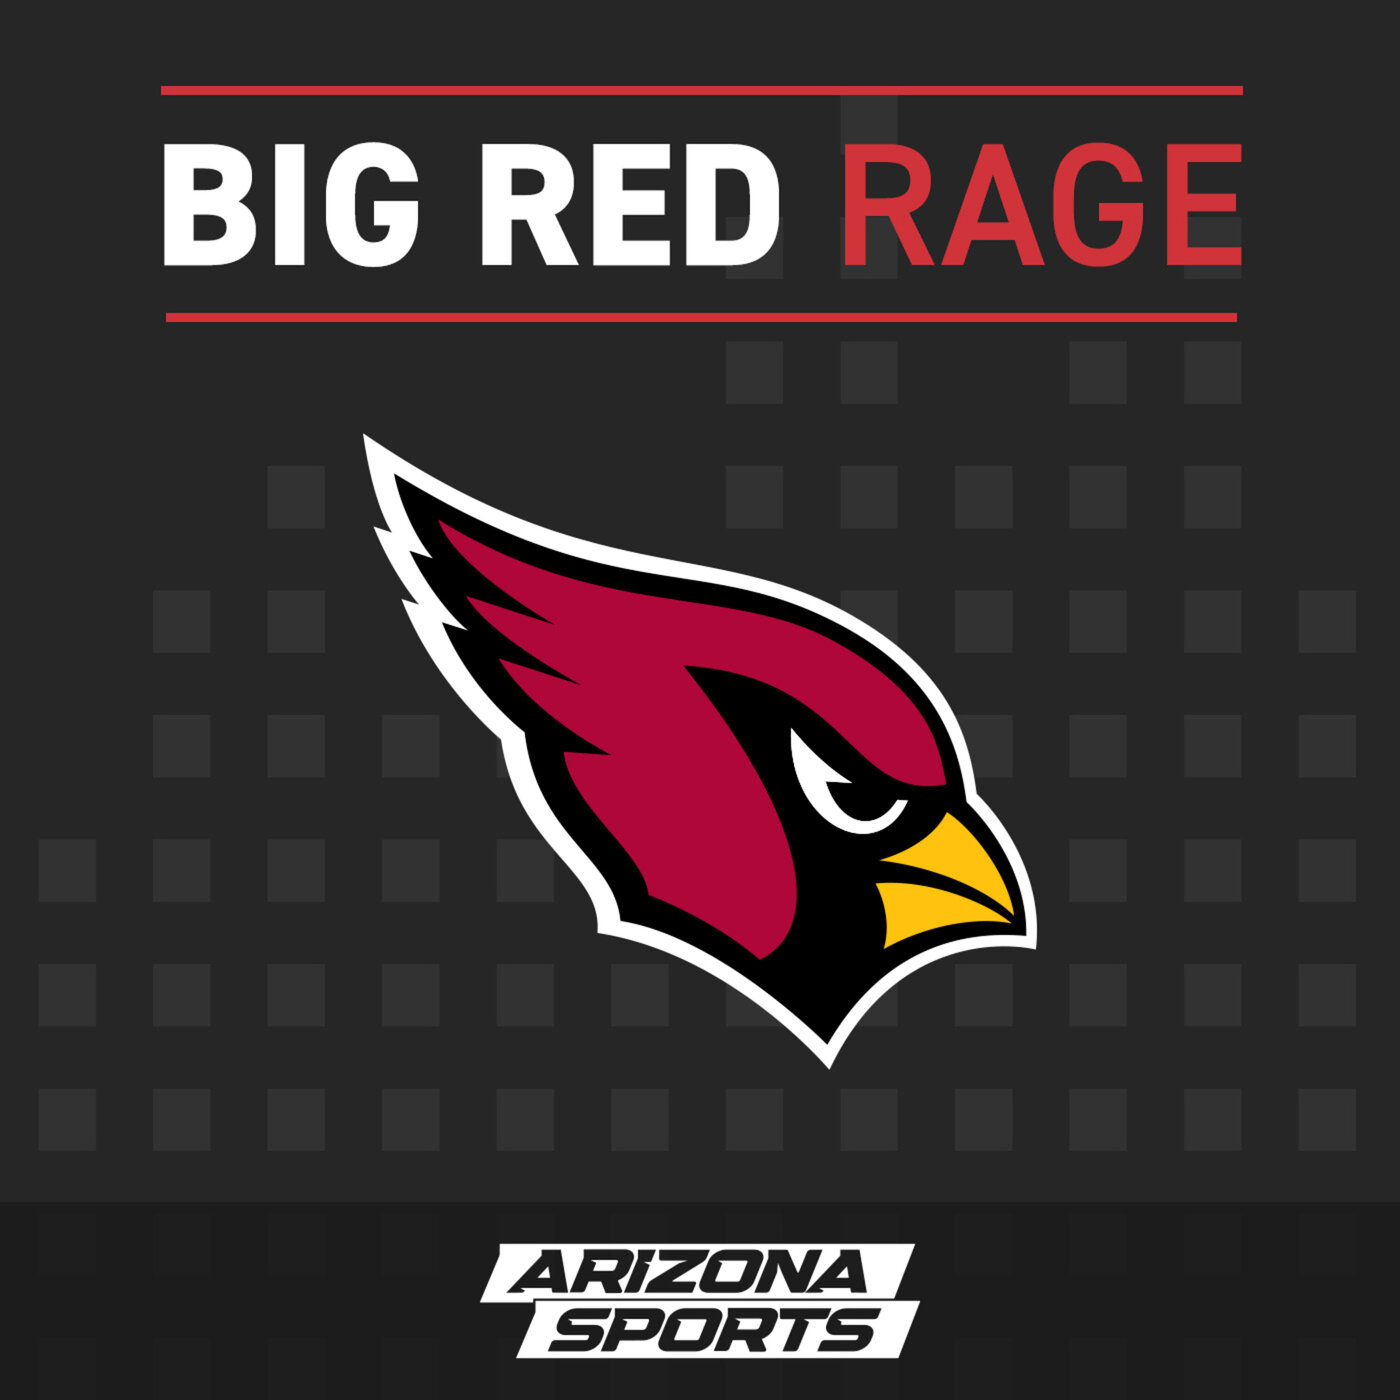 05-09-24 Big Red Rage